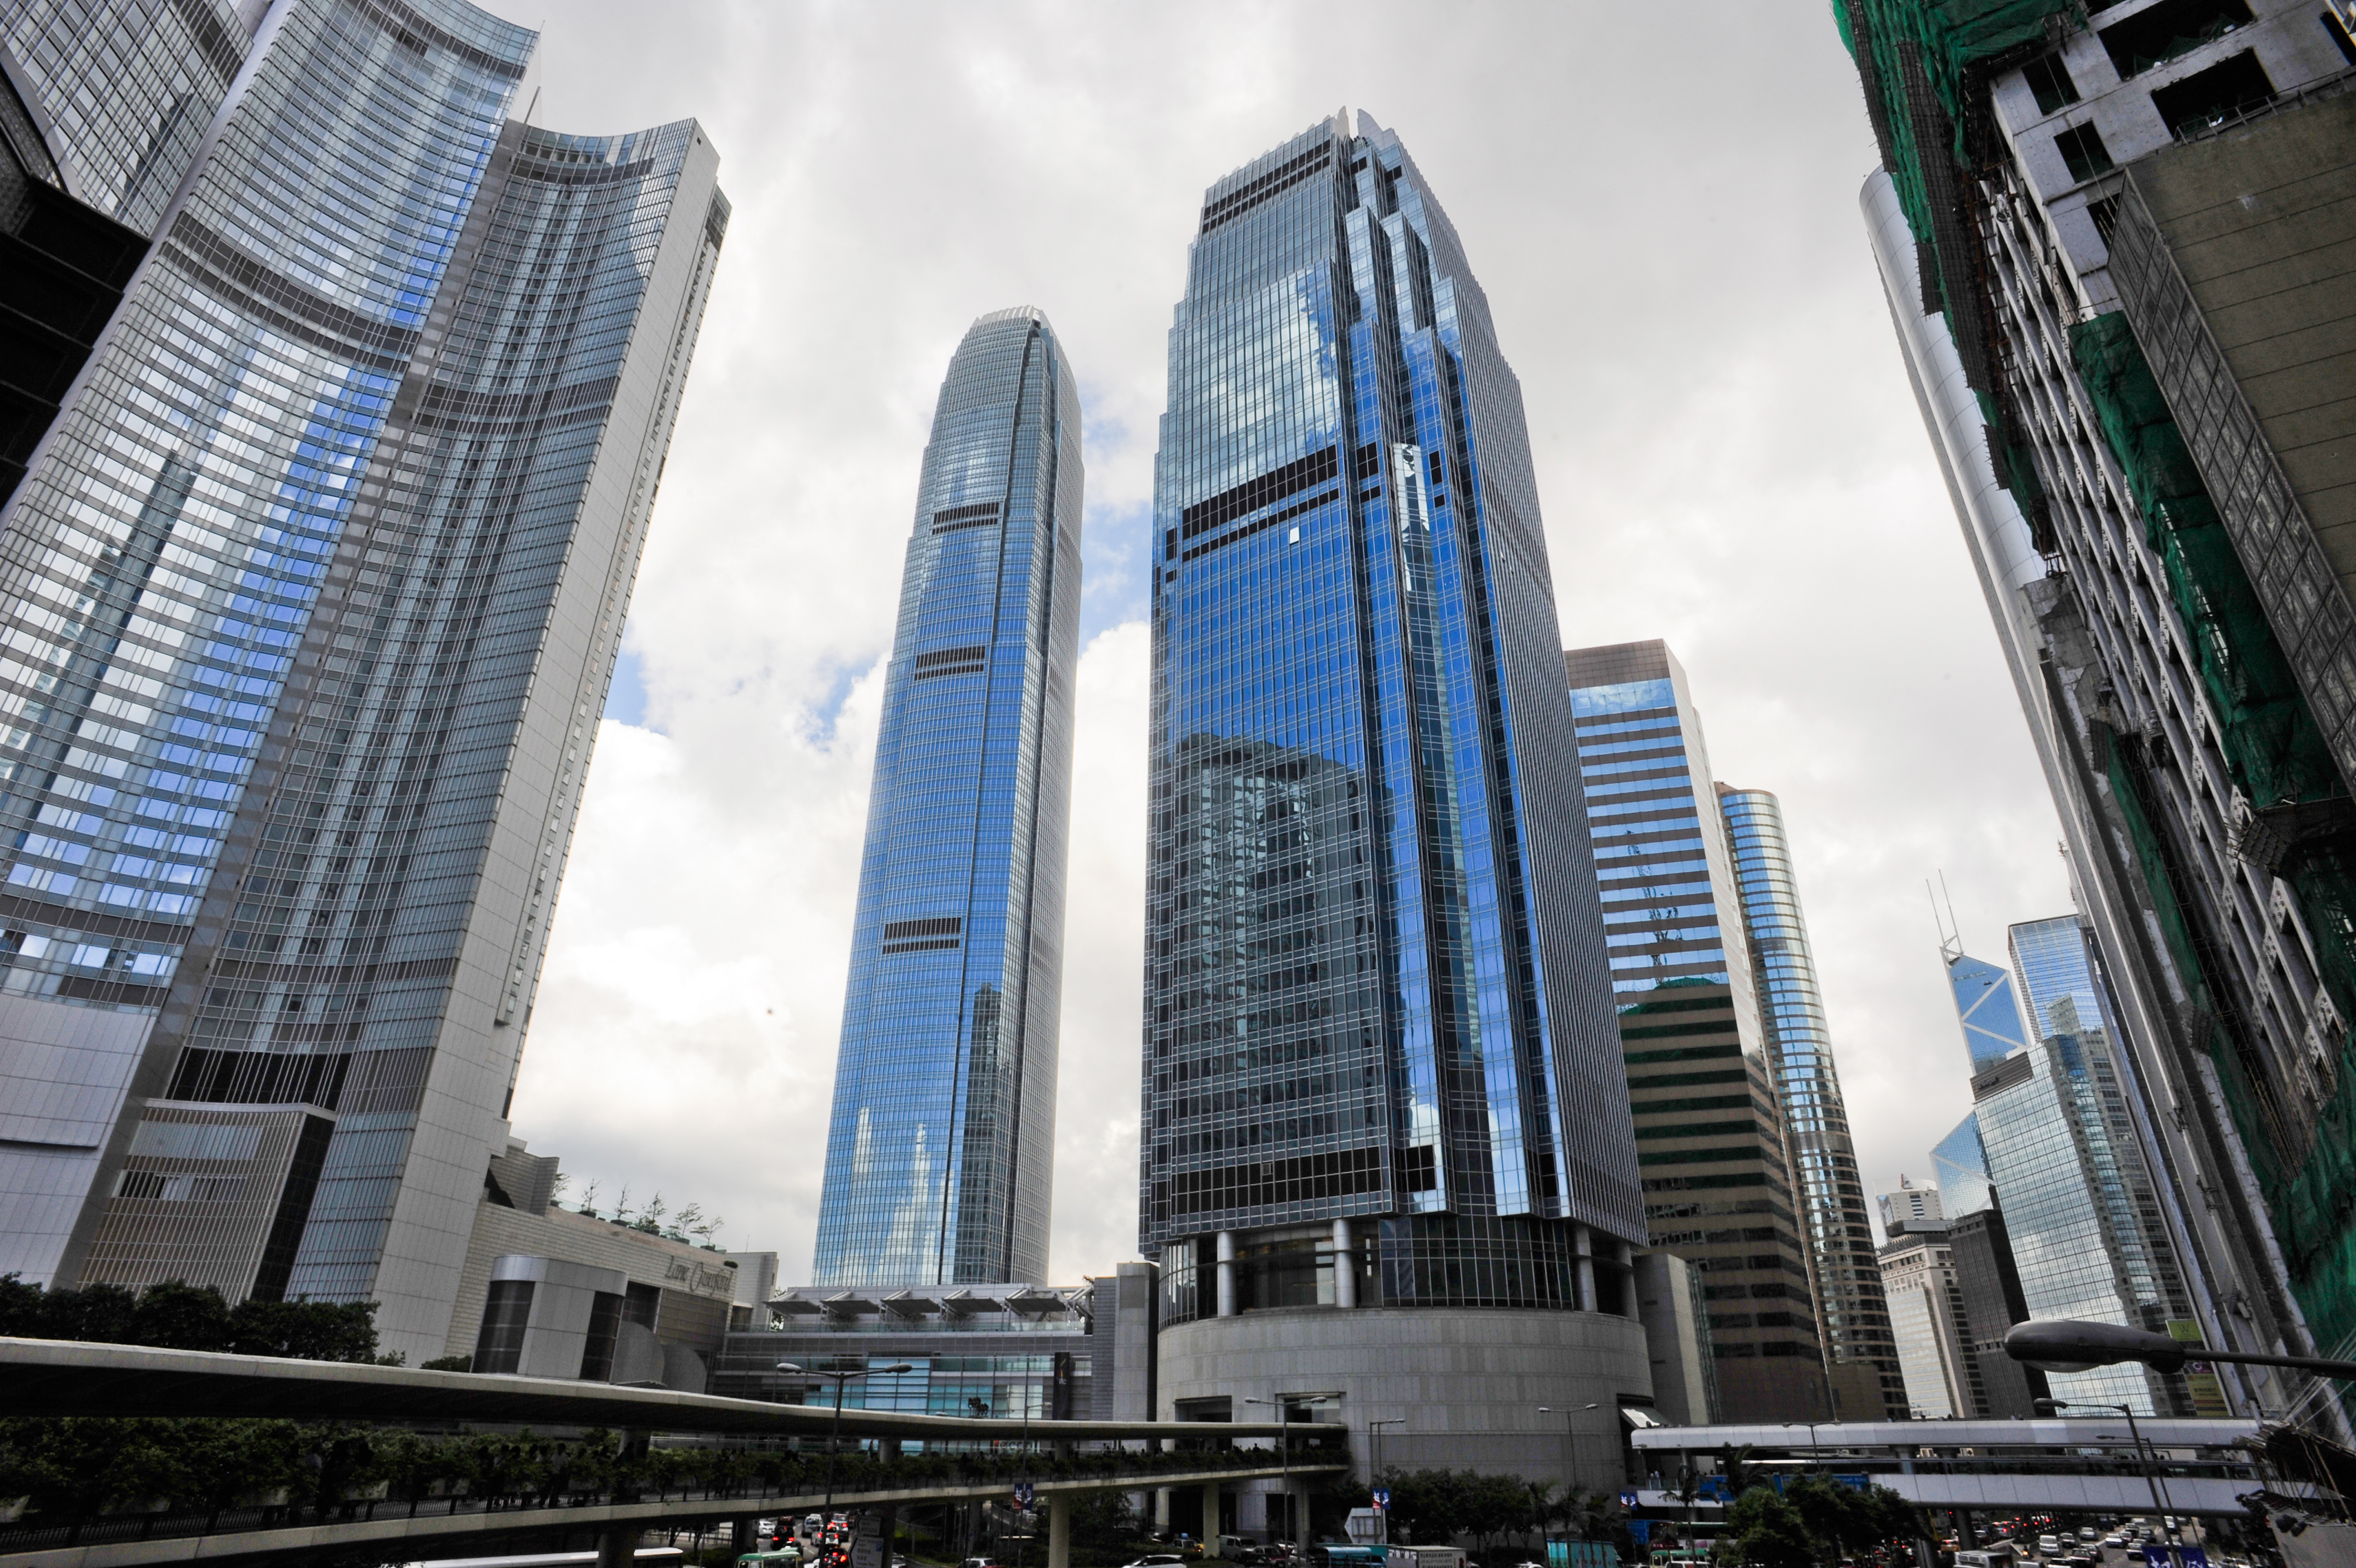 Finance Street, Central, Hong Kong Island, North of Hong Kong Island. Photo by Mstyslav Chernov via WikiCommons